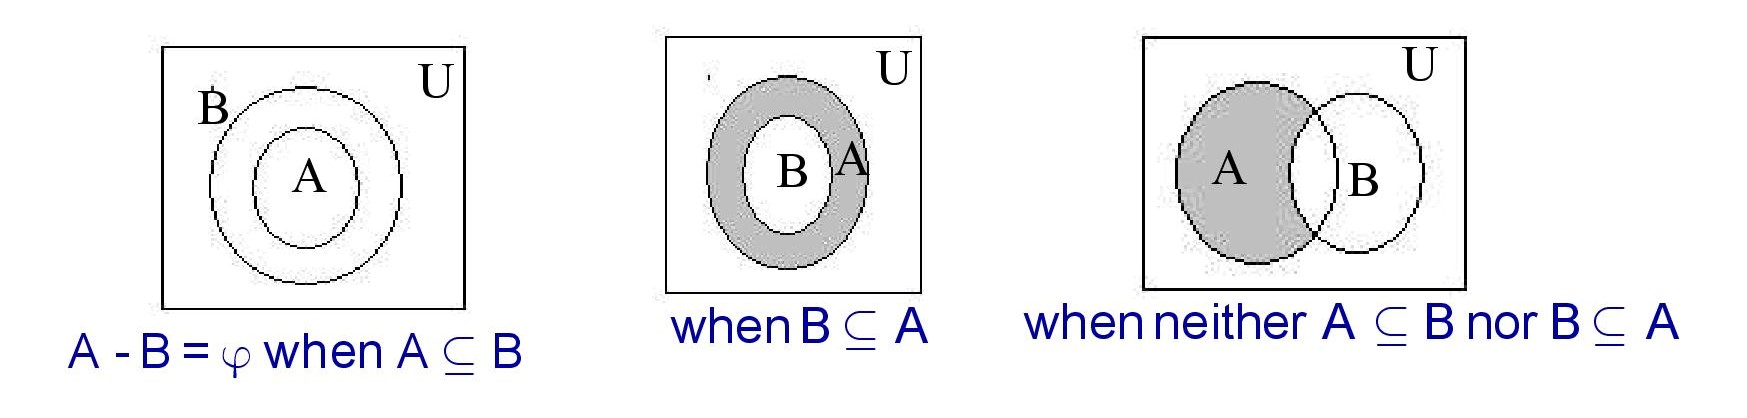 Venn Diagram of A - B